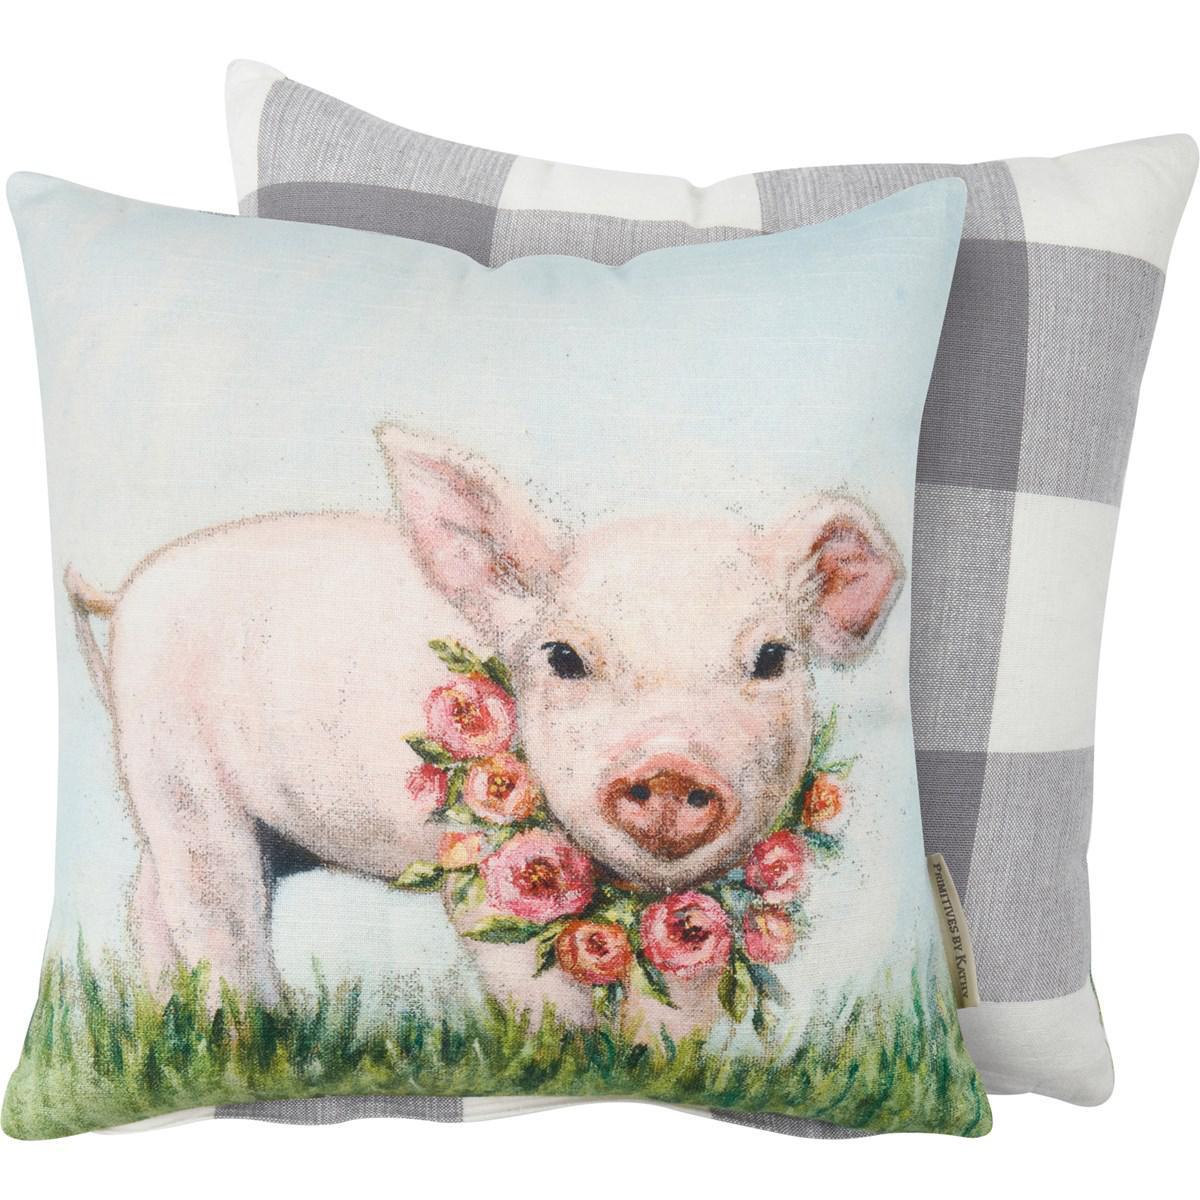 Floral Piglet Pillow